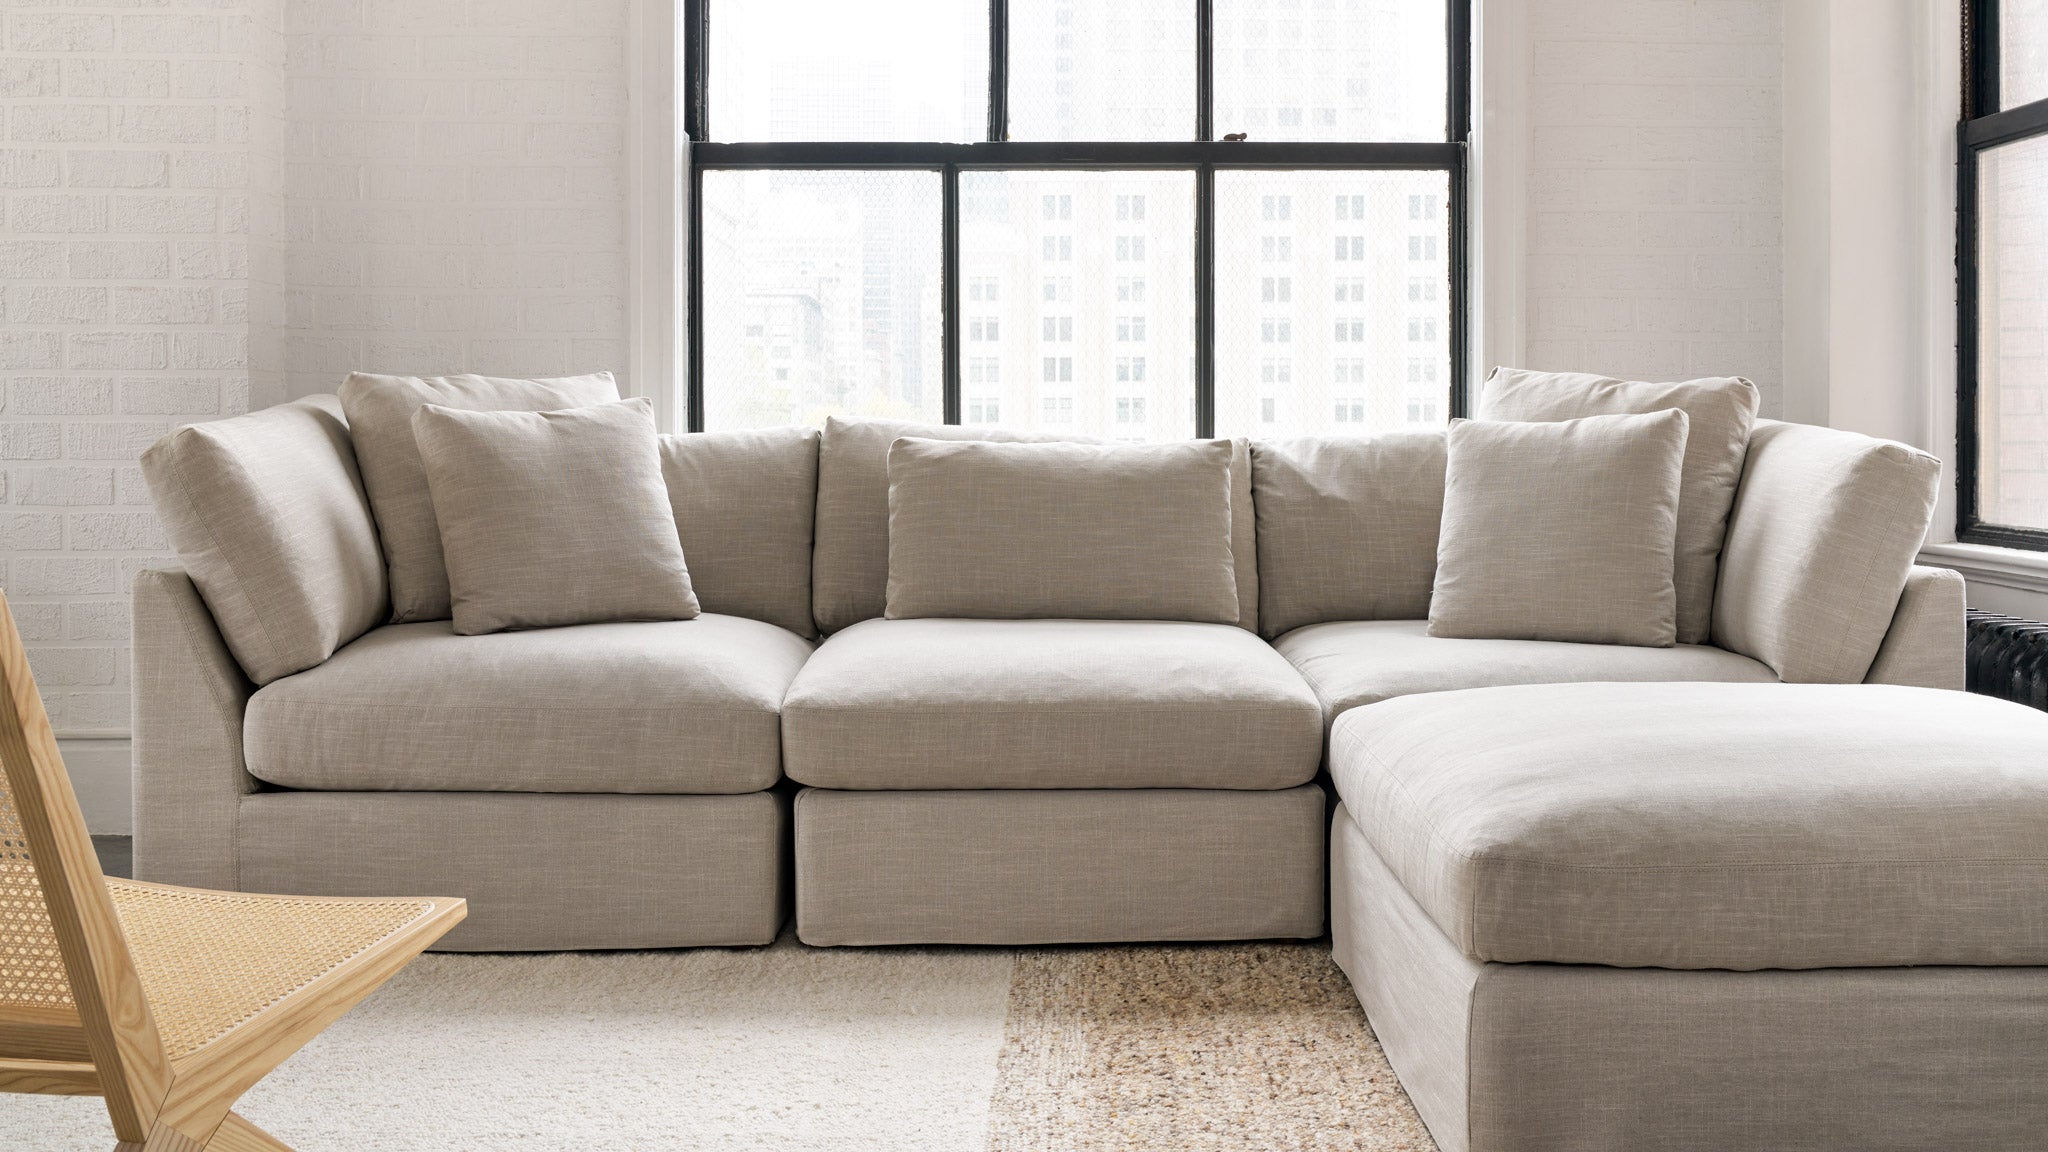 Get Together™ 2-Piece Modular Sofa, Large, Light Pebble - Image 6